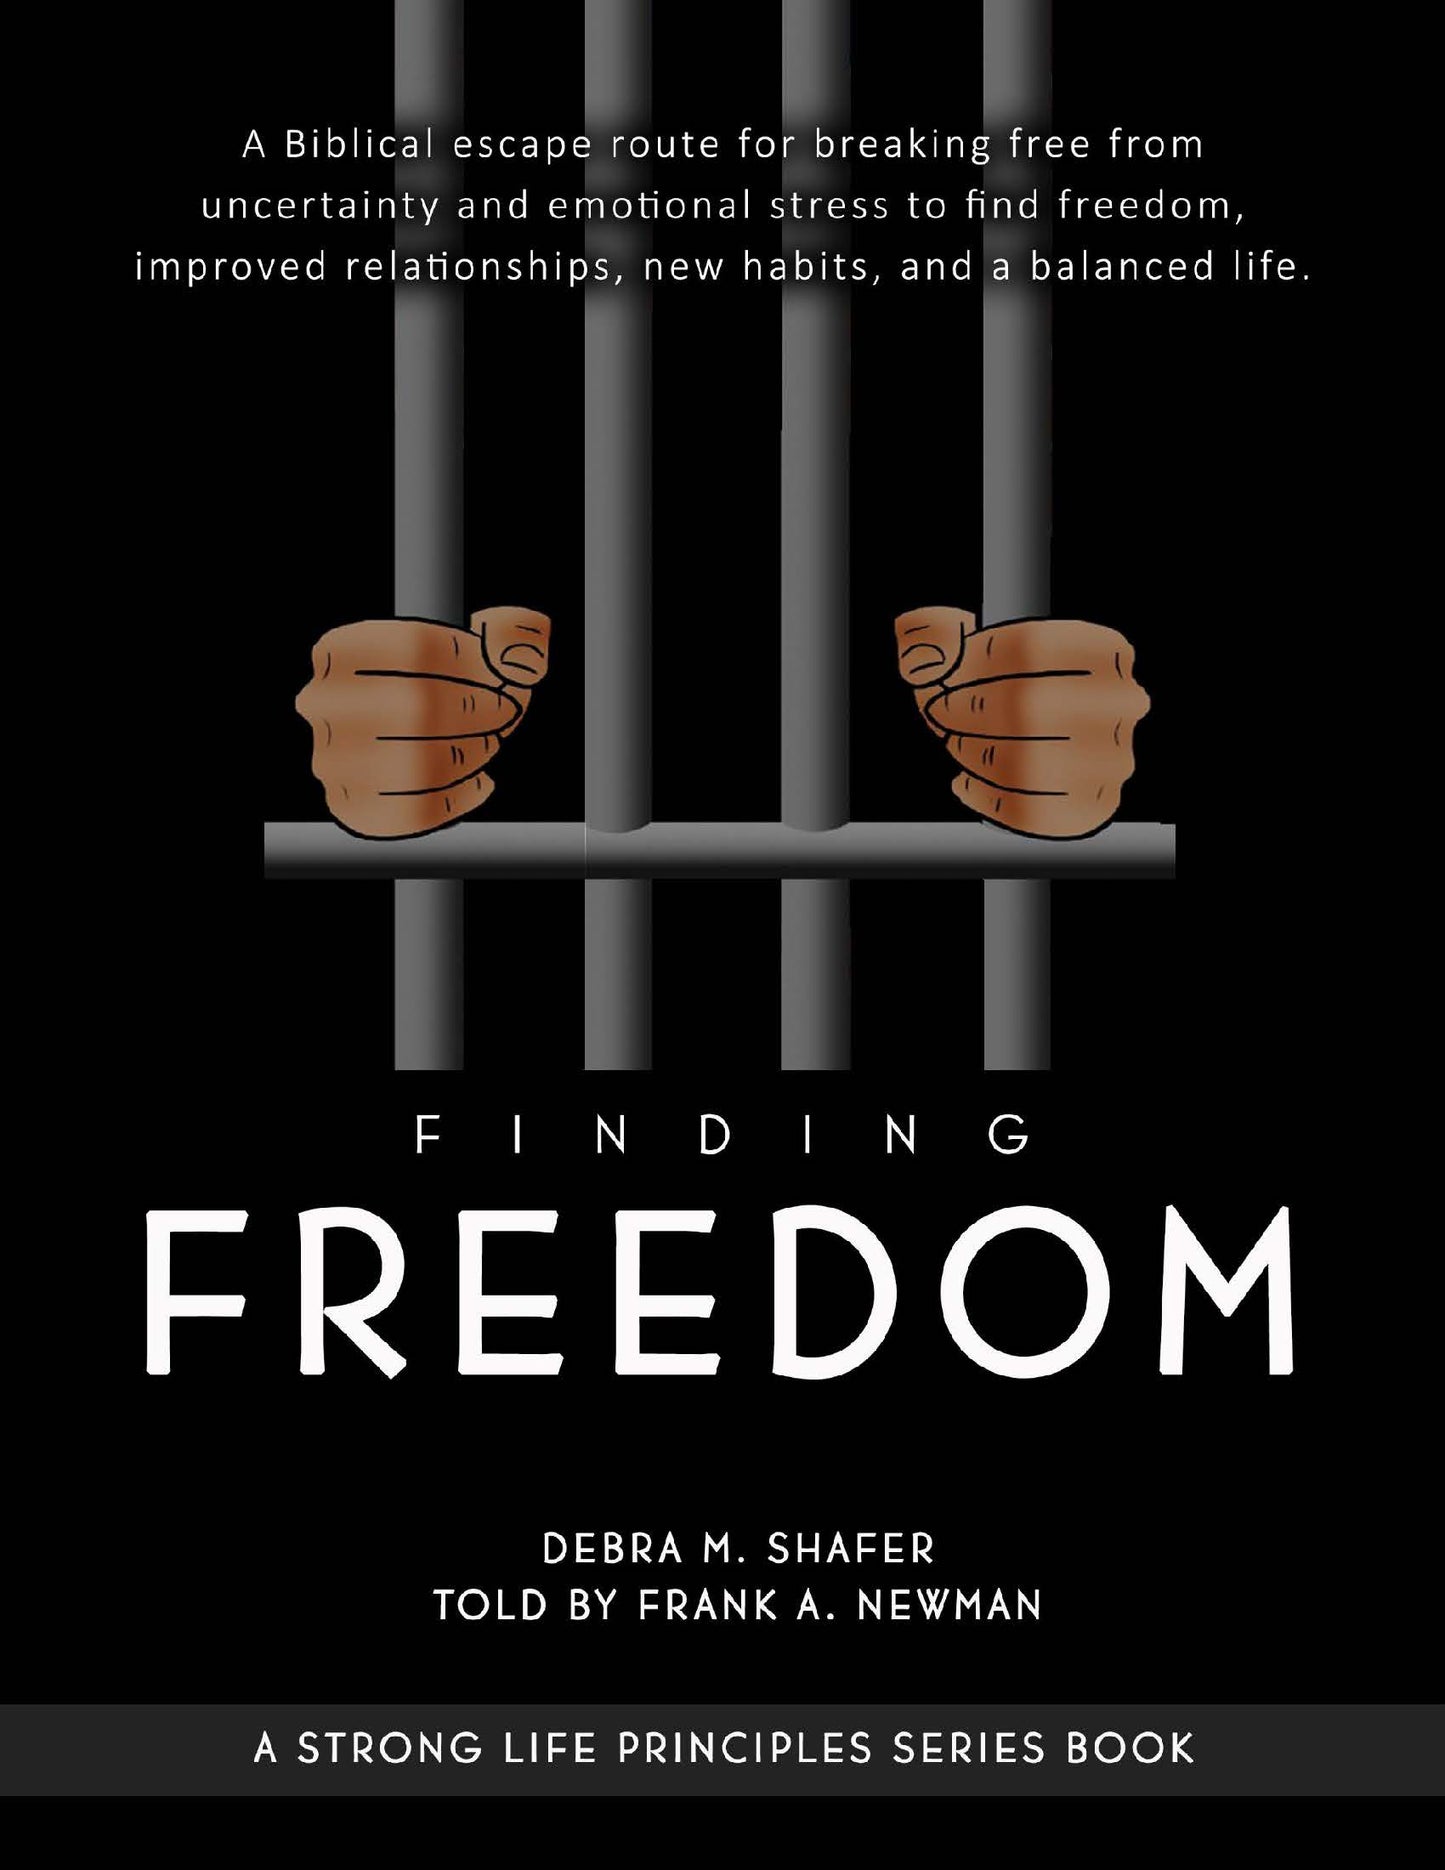 Finding Freedom Book (hardcopy)